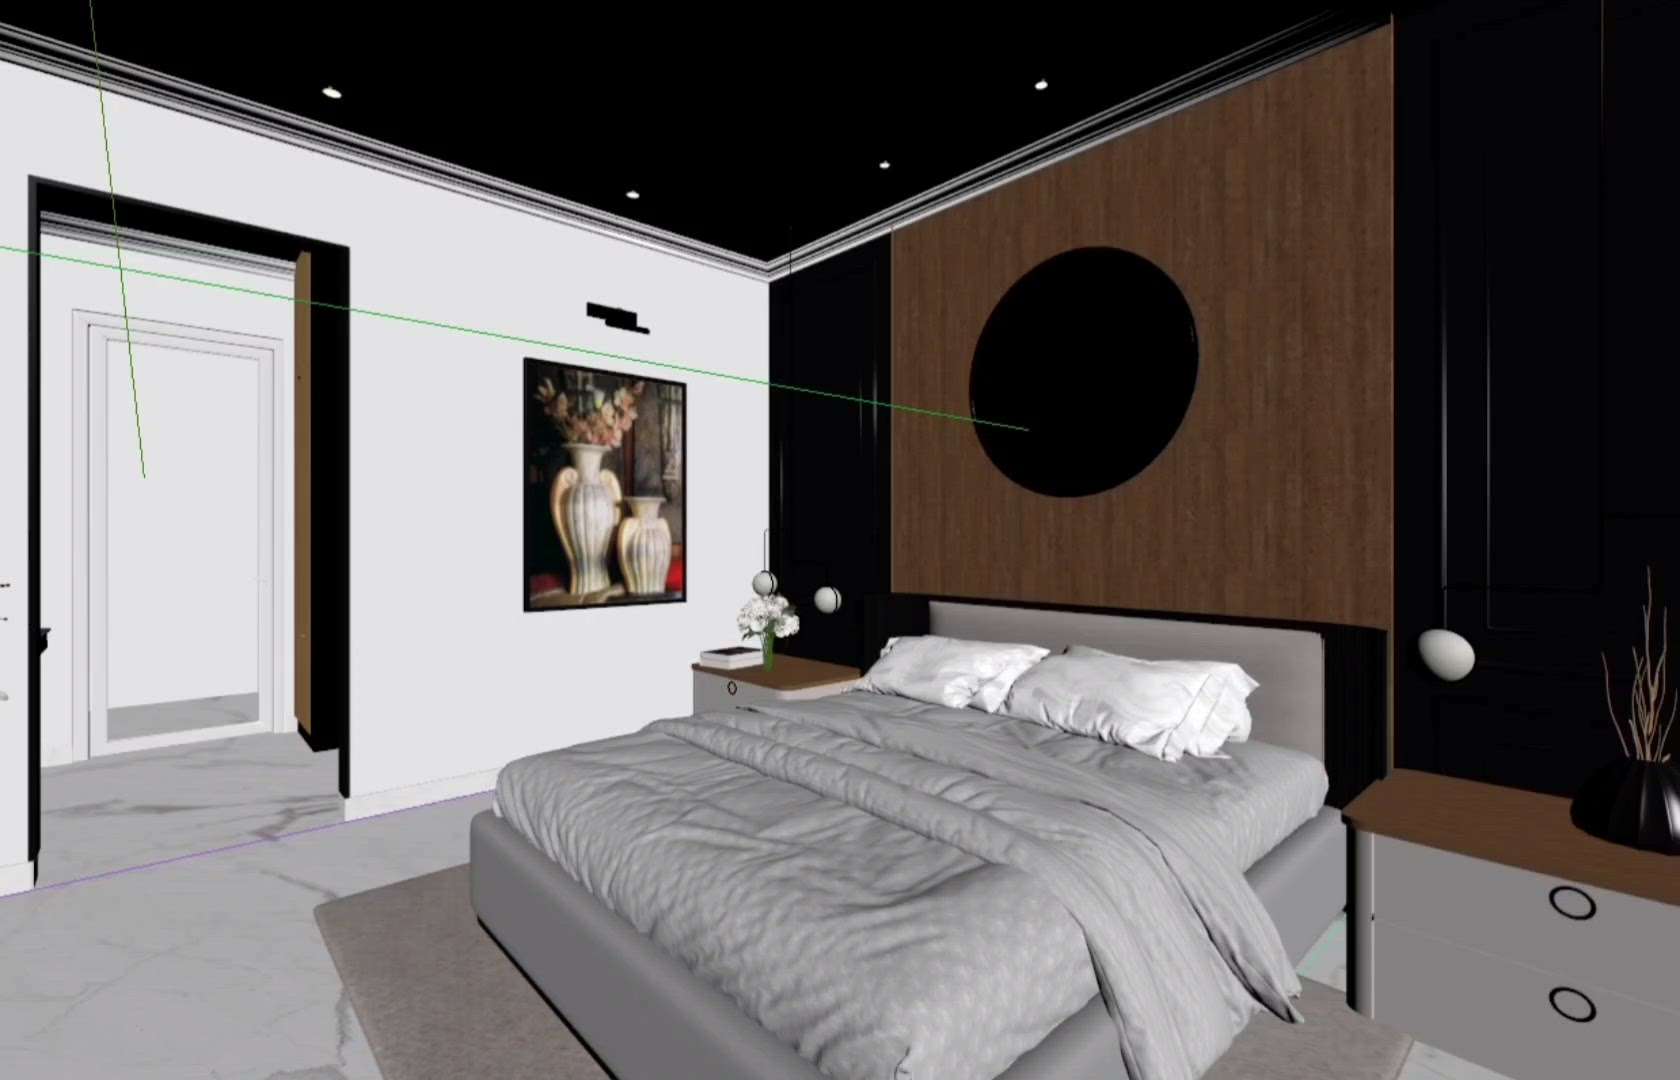 bedroom walkthrough!!
#walkthrough_animations #walkthrough #MasterBedroom #BedroomDesigns #render3d #interiortrendz #bedroomwardrobe #tvunits #consoleideas